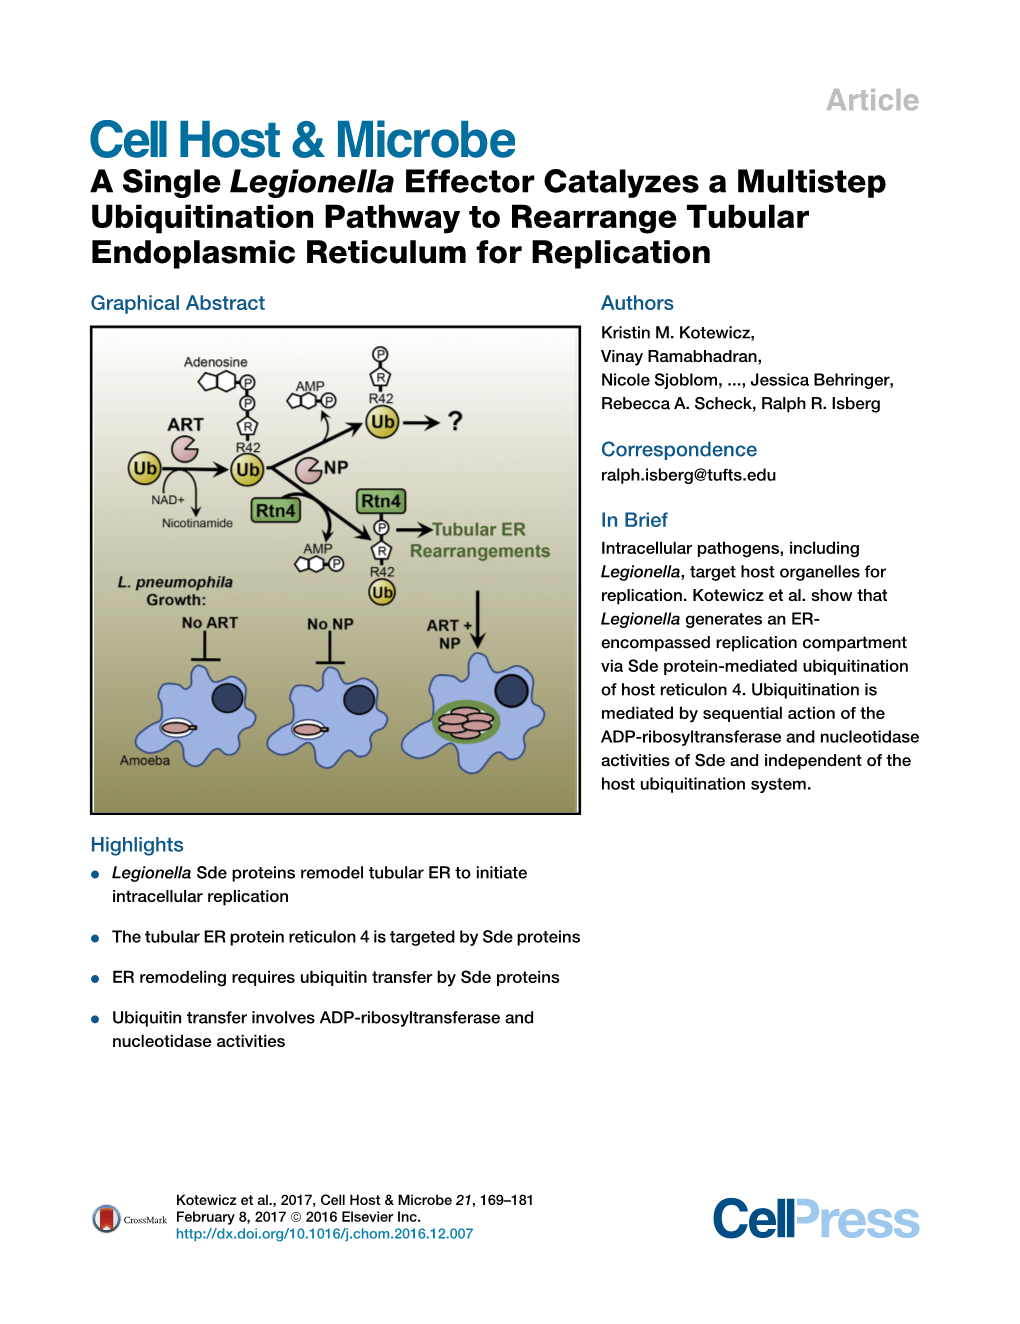 A Single Legionella Effector Catalyzes a Multistep Ubiquitination Pathway to Rearrange Tubular Endoplasmic Reticulum for Replication